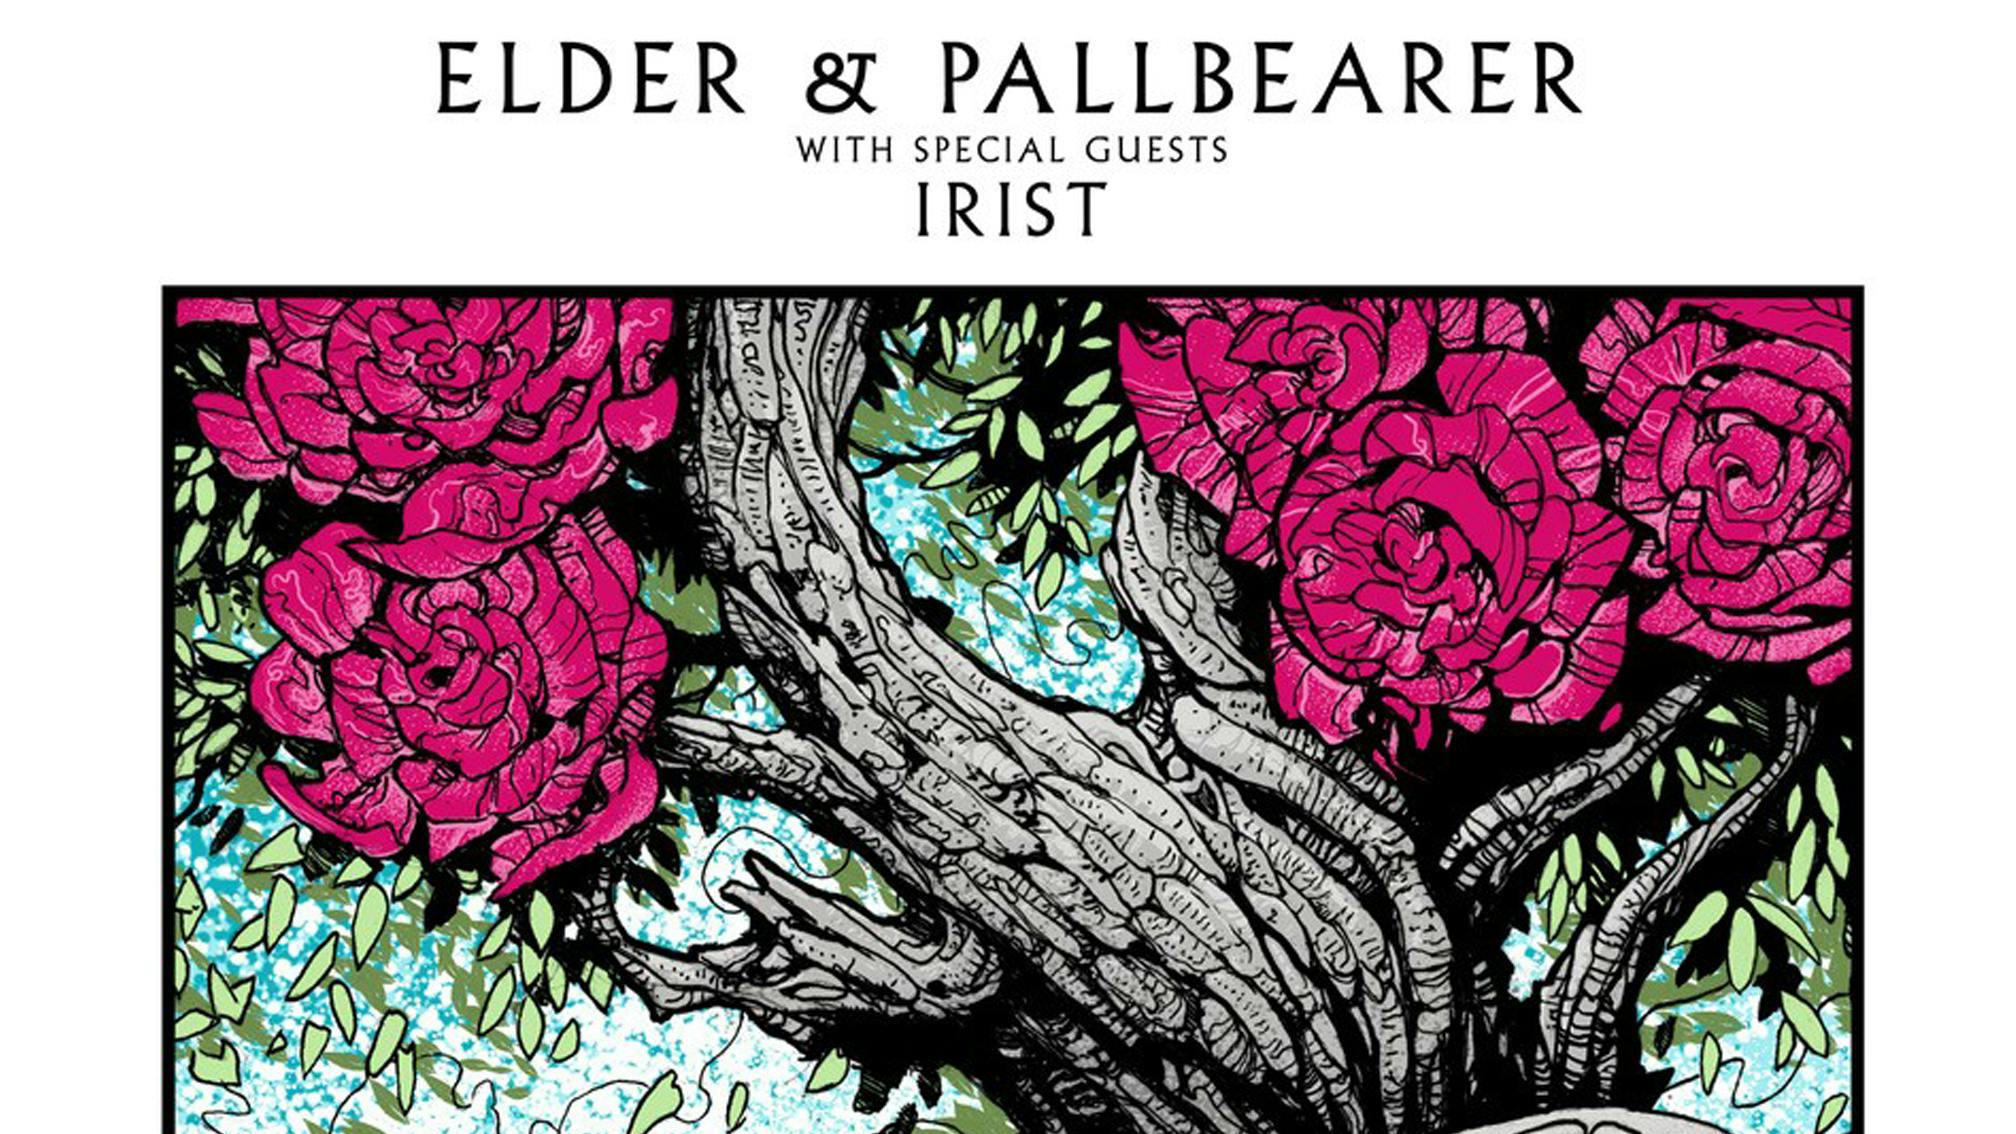 Pallbearer and Elder have announced a UK / European co-headline tour